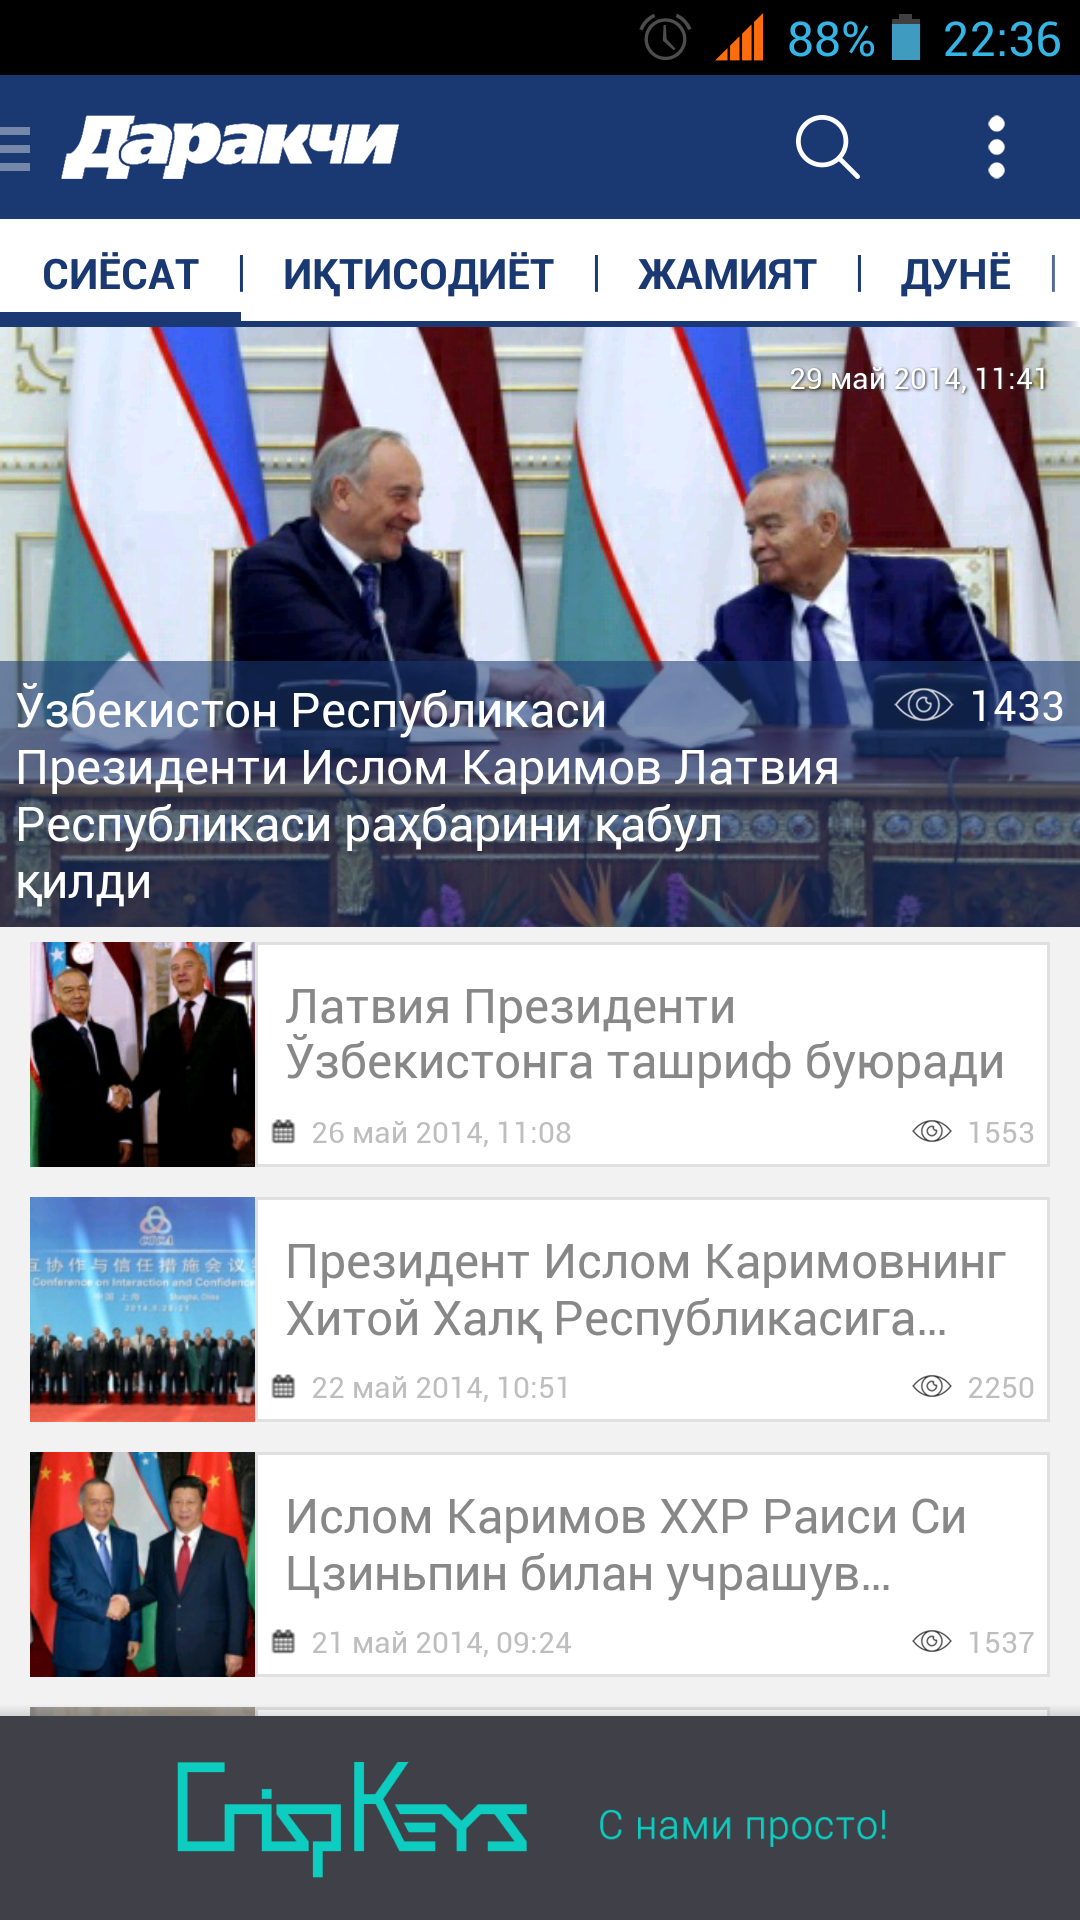 Android application Даракчи screenshort